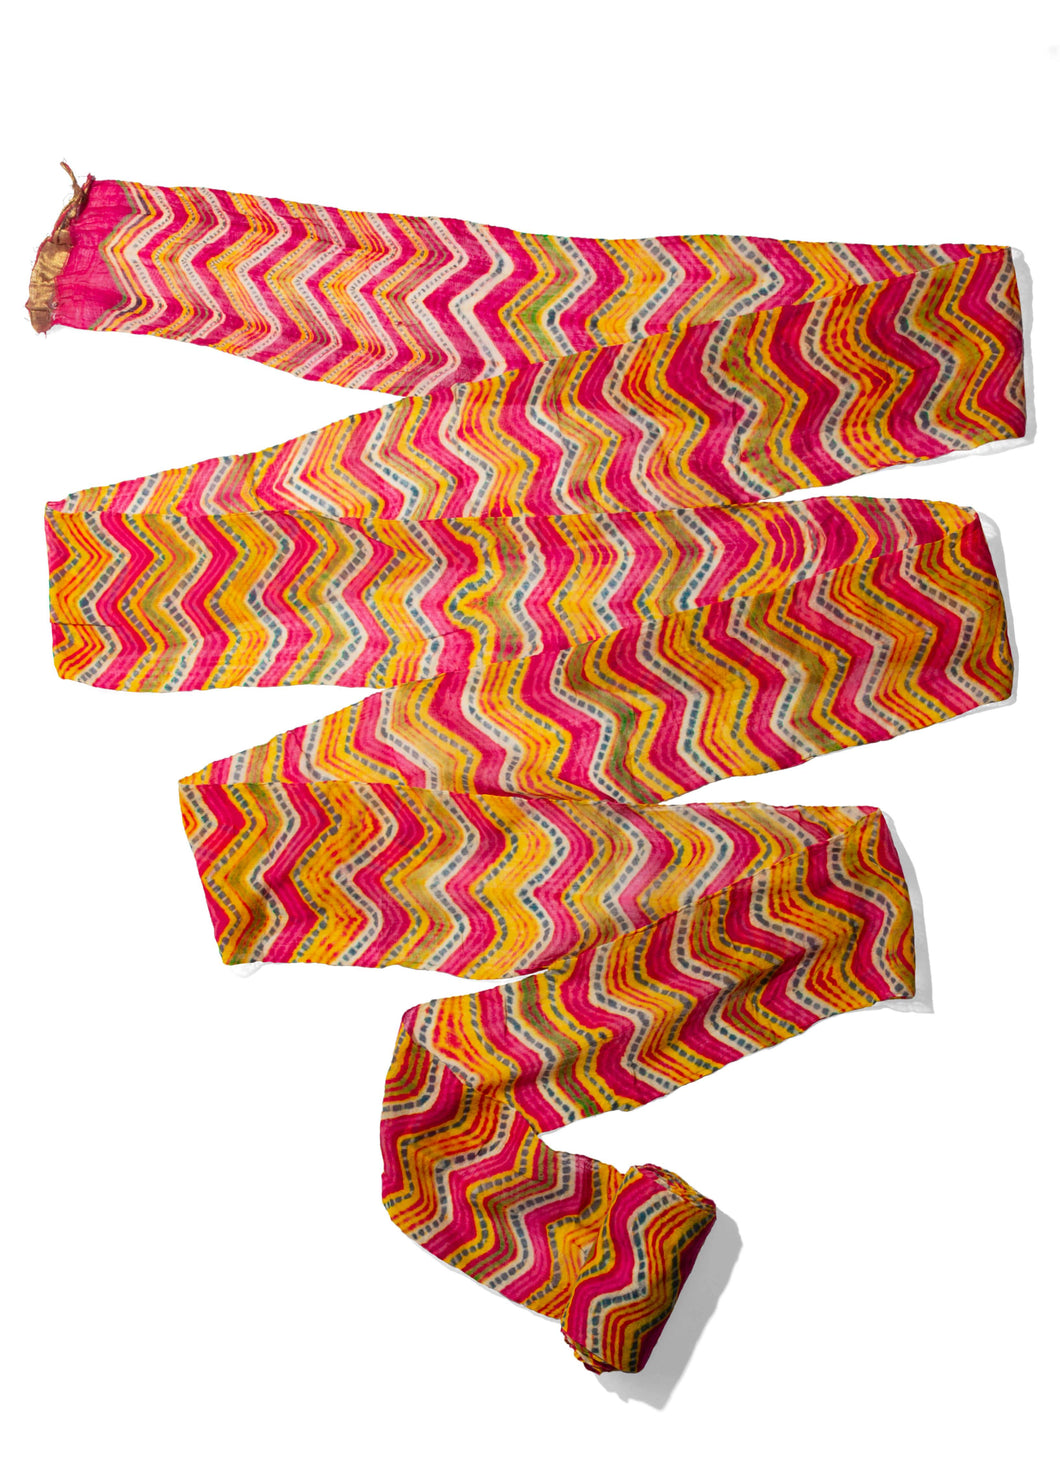 Rajistani Lehriya Turban, long cotton flat woven textile with wave design in magenta, yellow and green dots